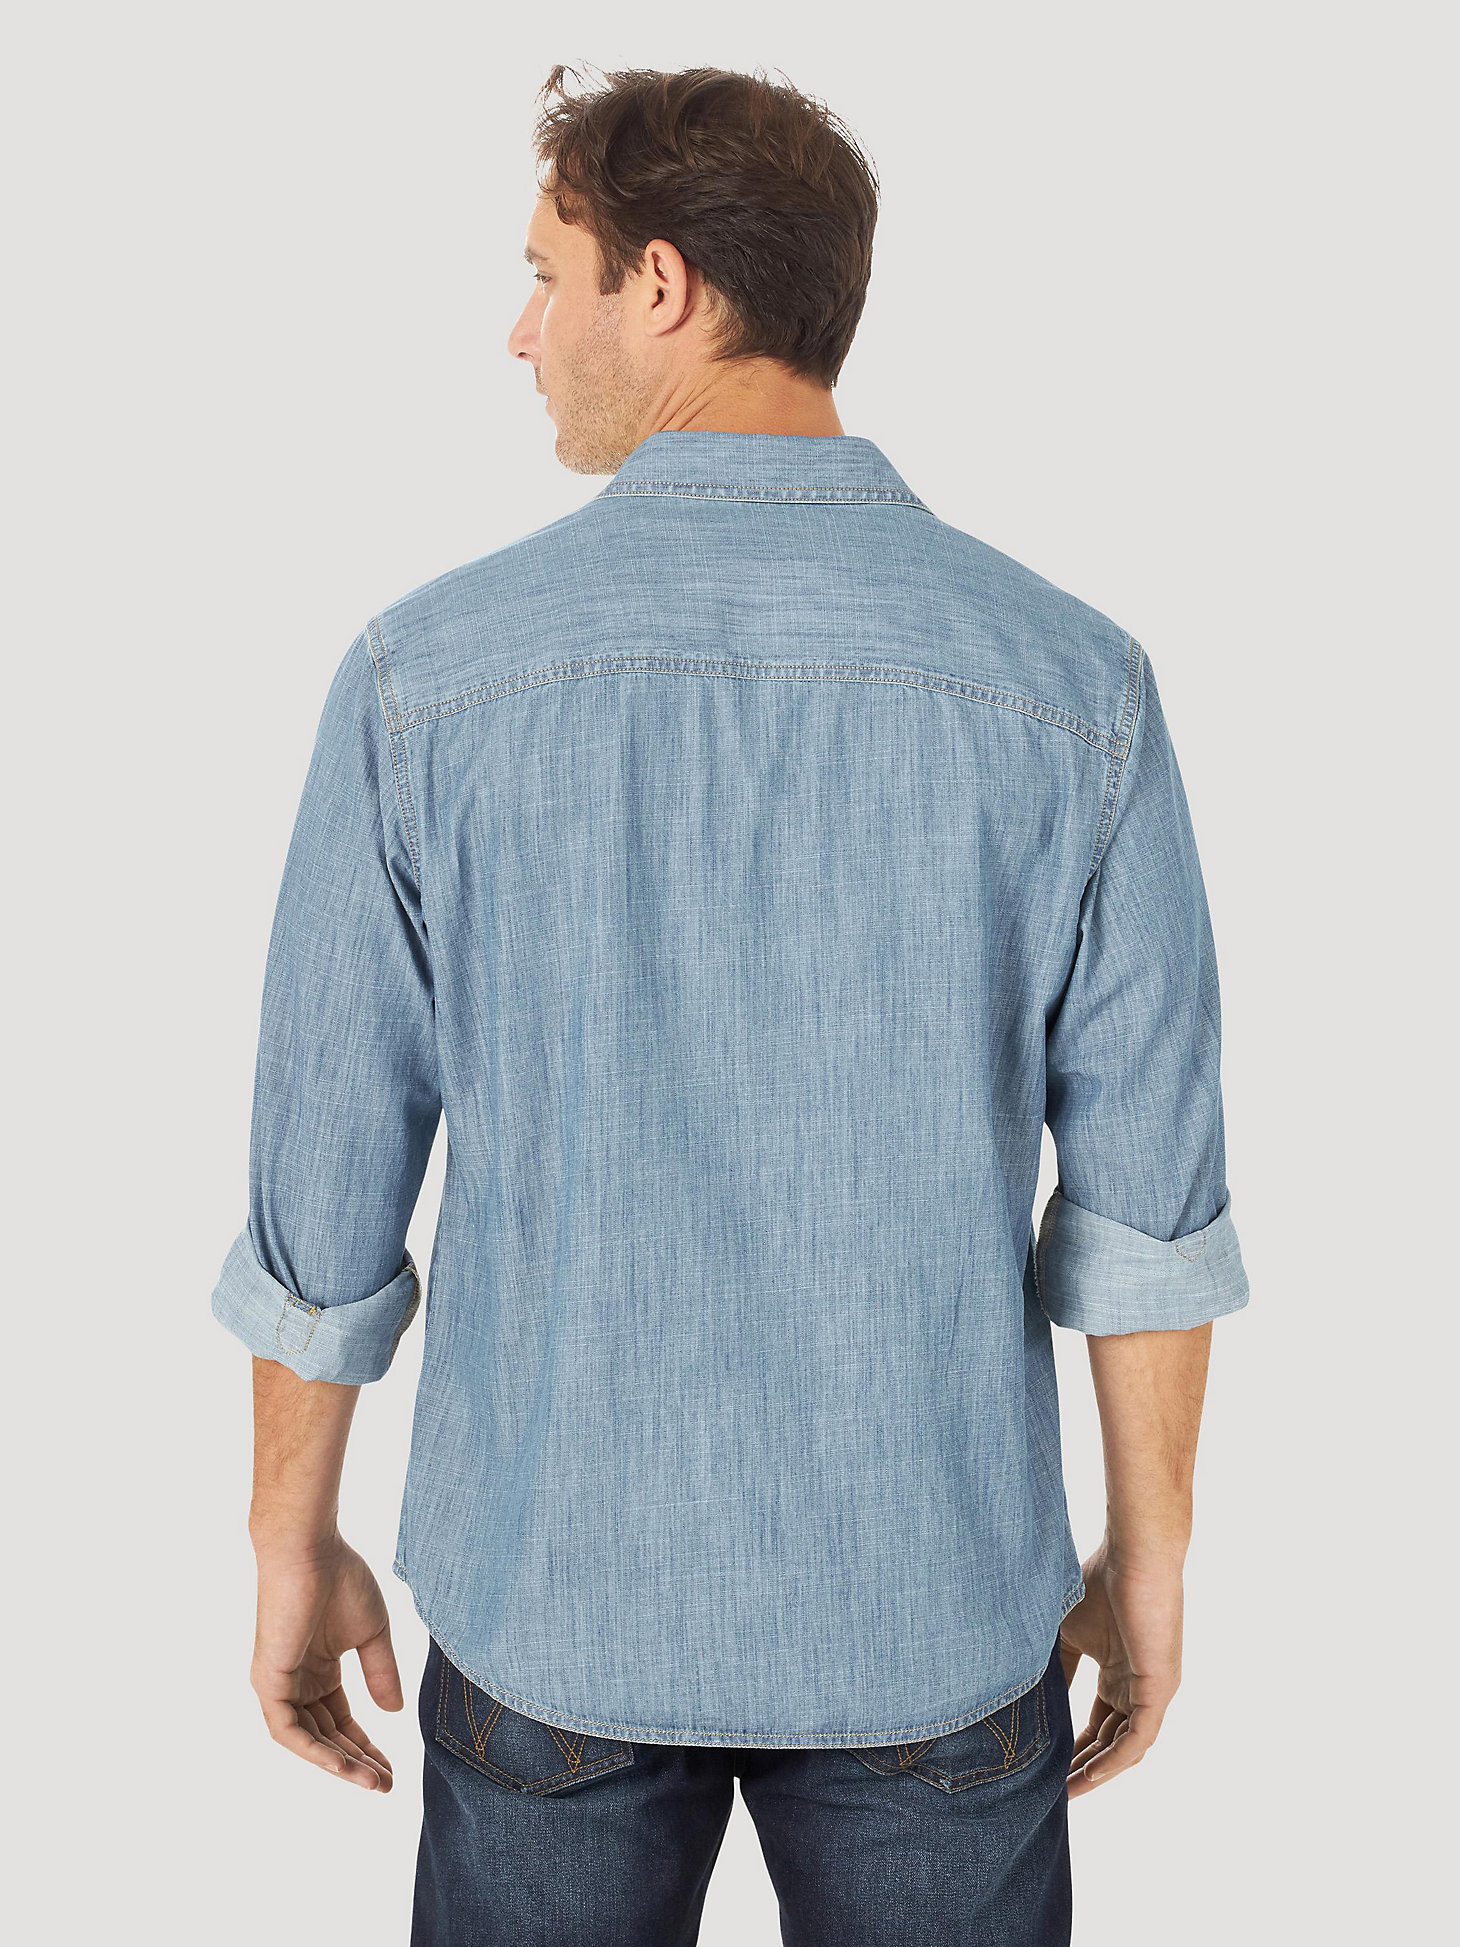 Men's Wrangler Retro® Premium Long Sleeve Button Down Denim Shirt in Denim alternative view 1